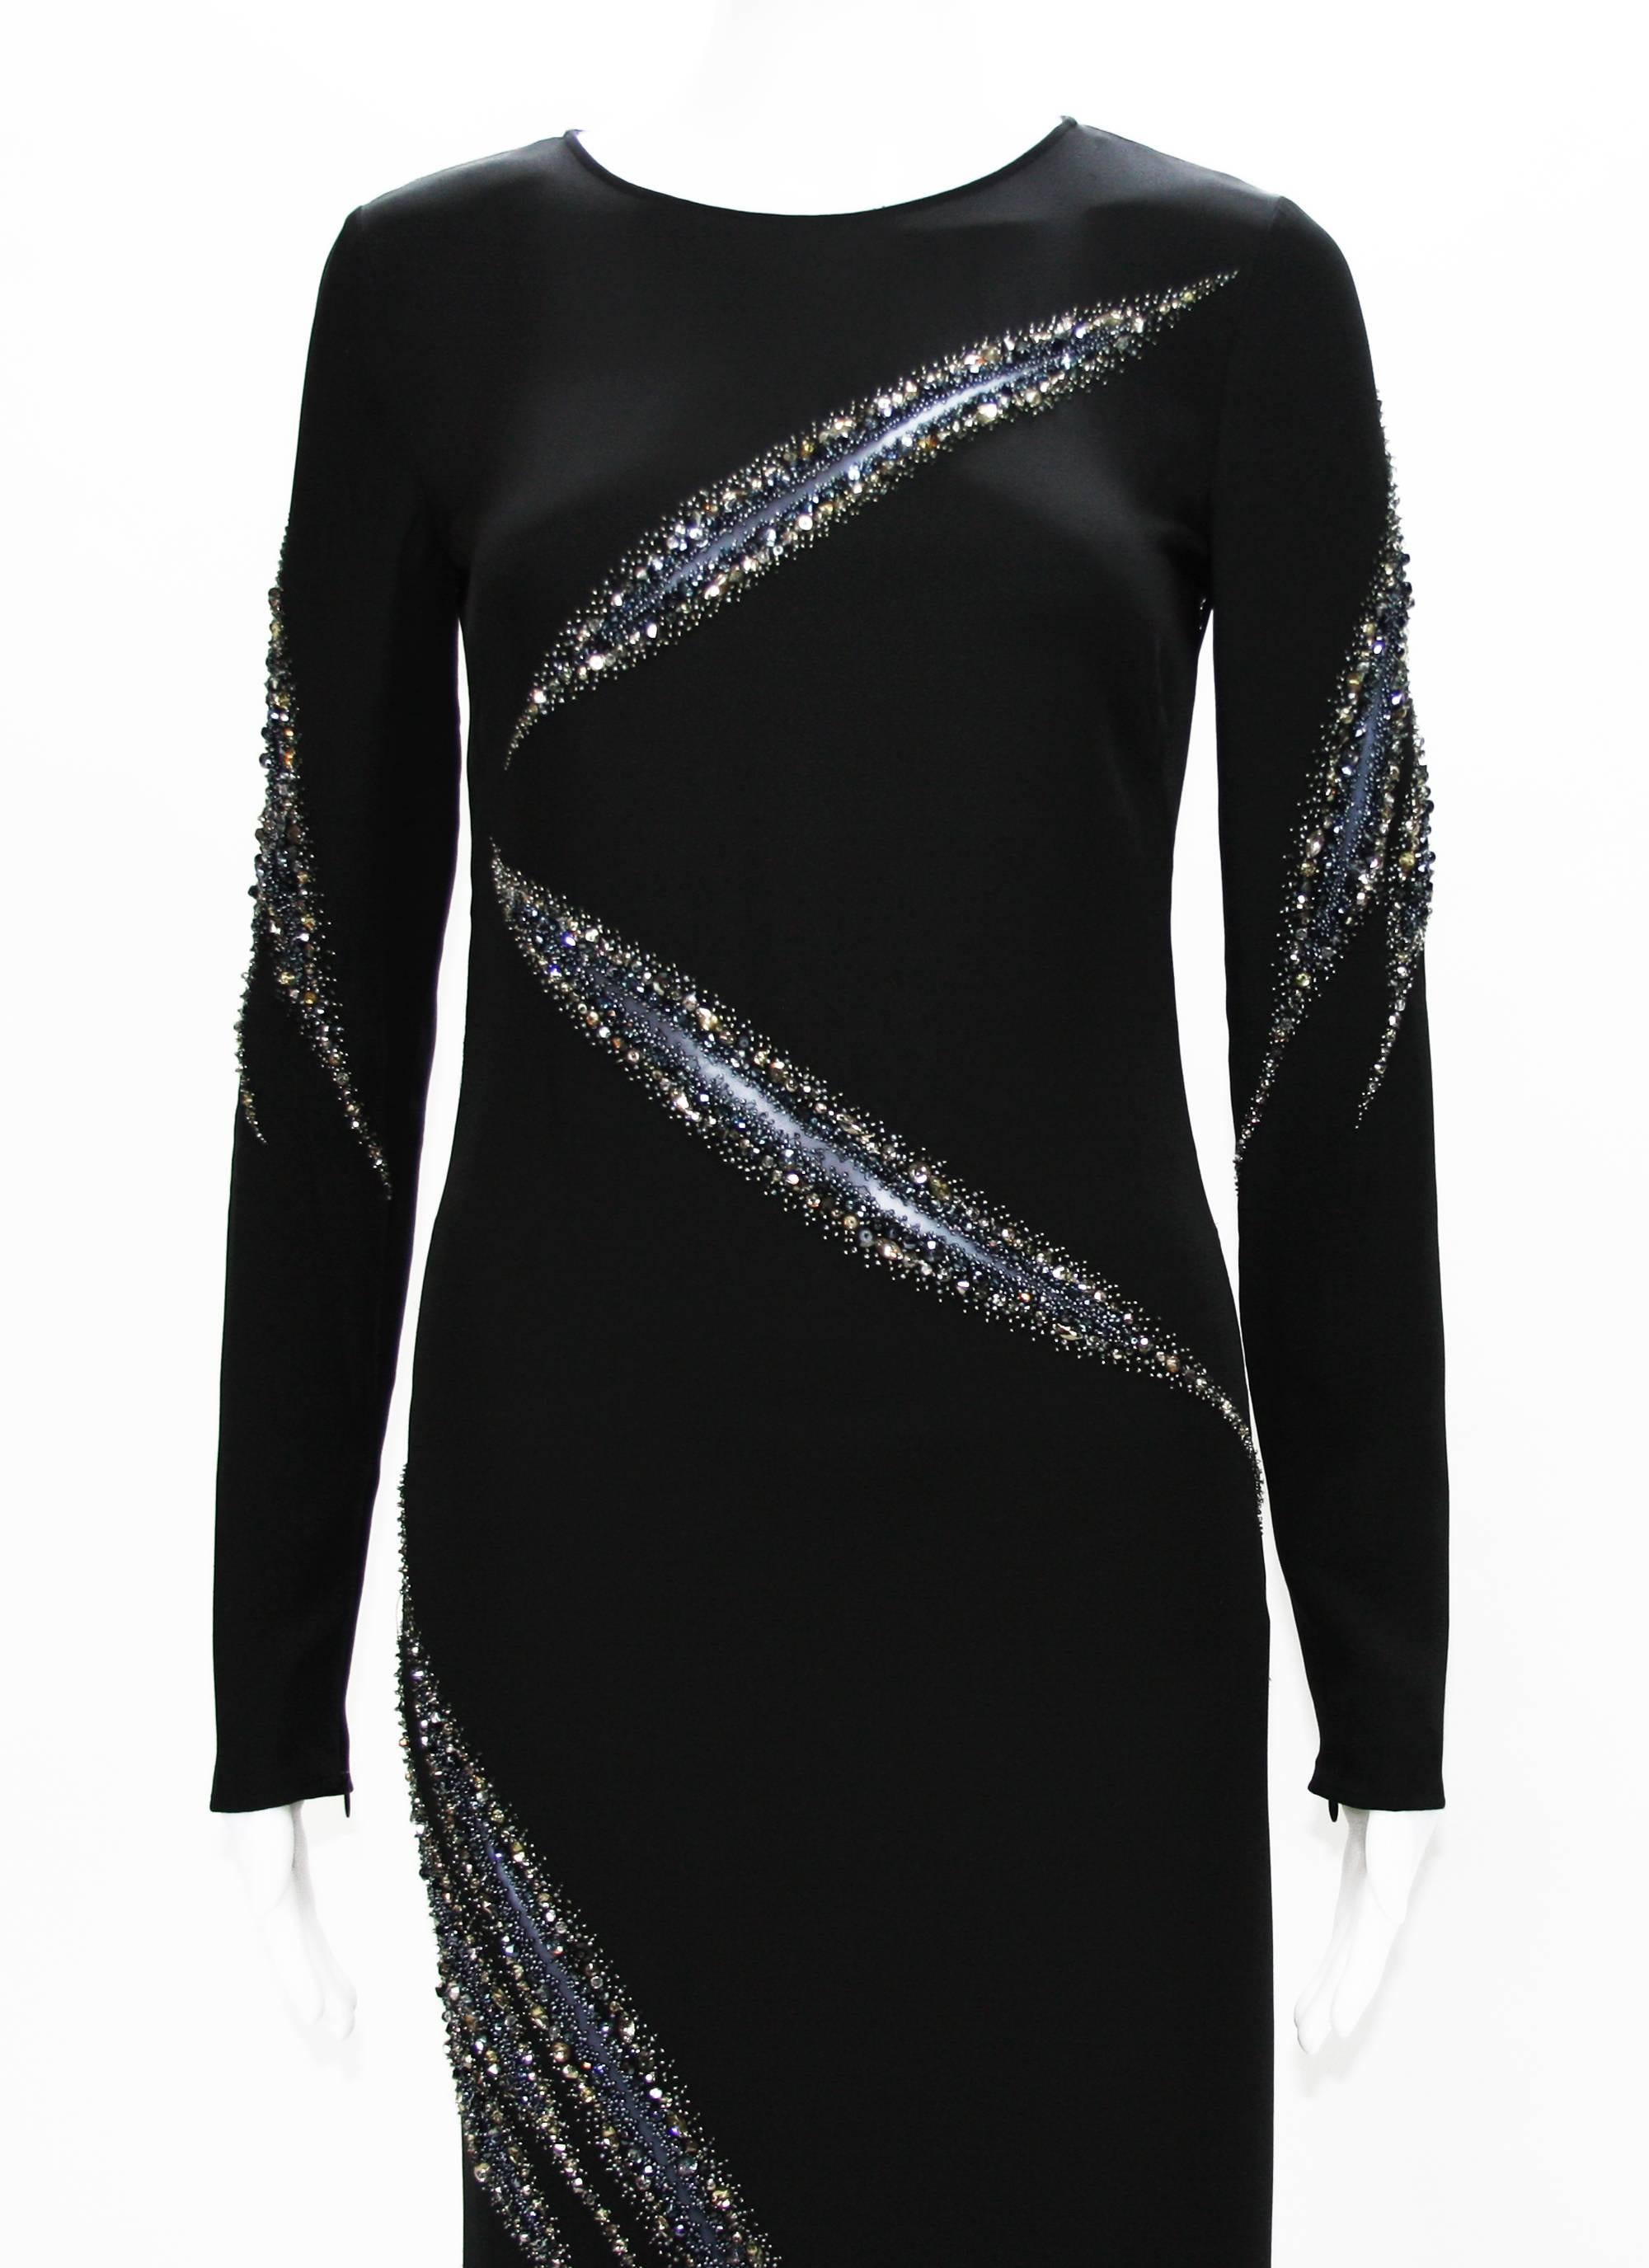 Emilio Pucci Embellished Gown Eva Longoria Wore to the ALMA Awards It 38 US 4 2